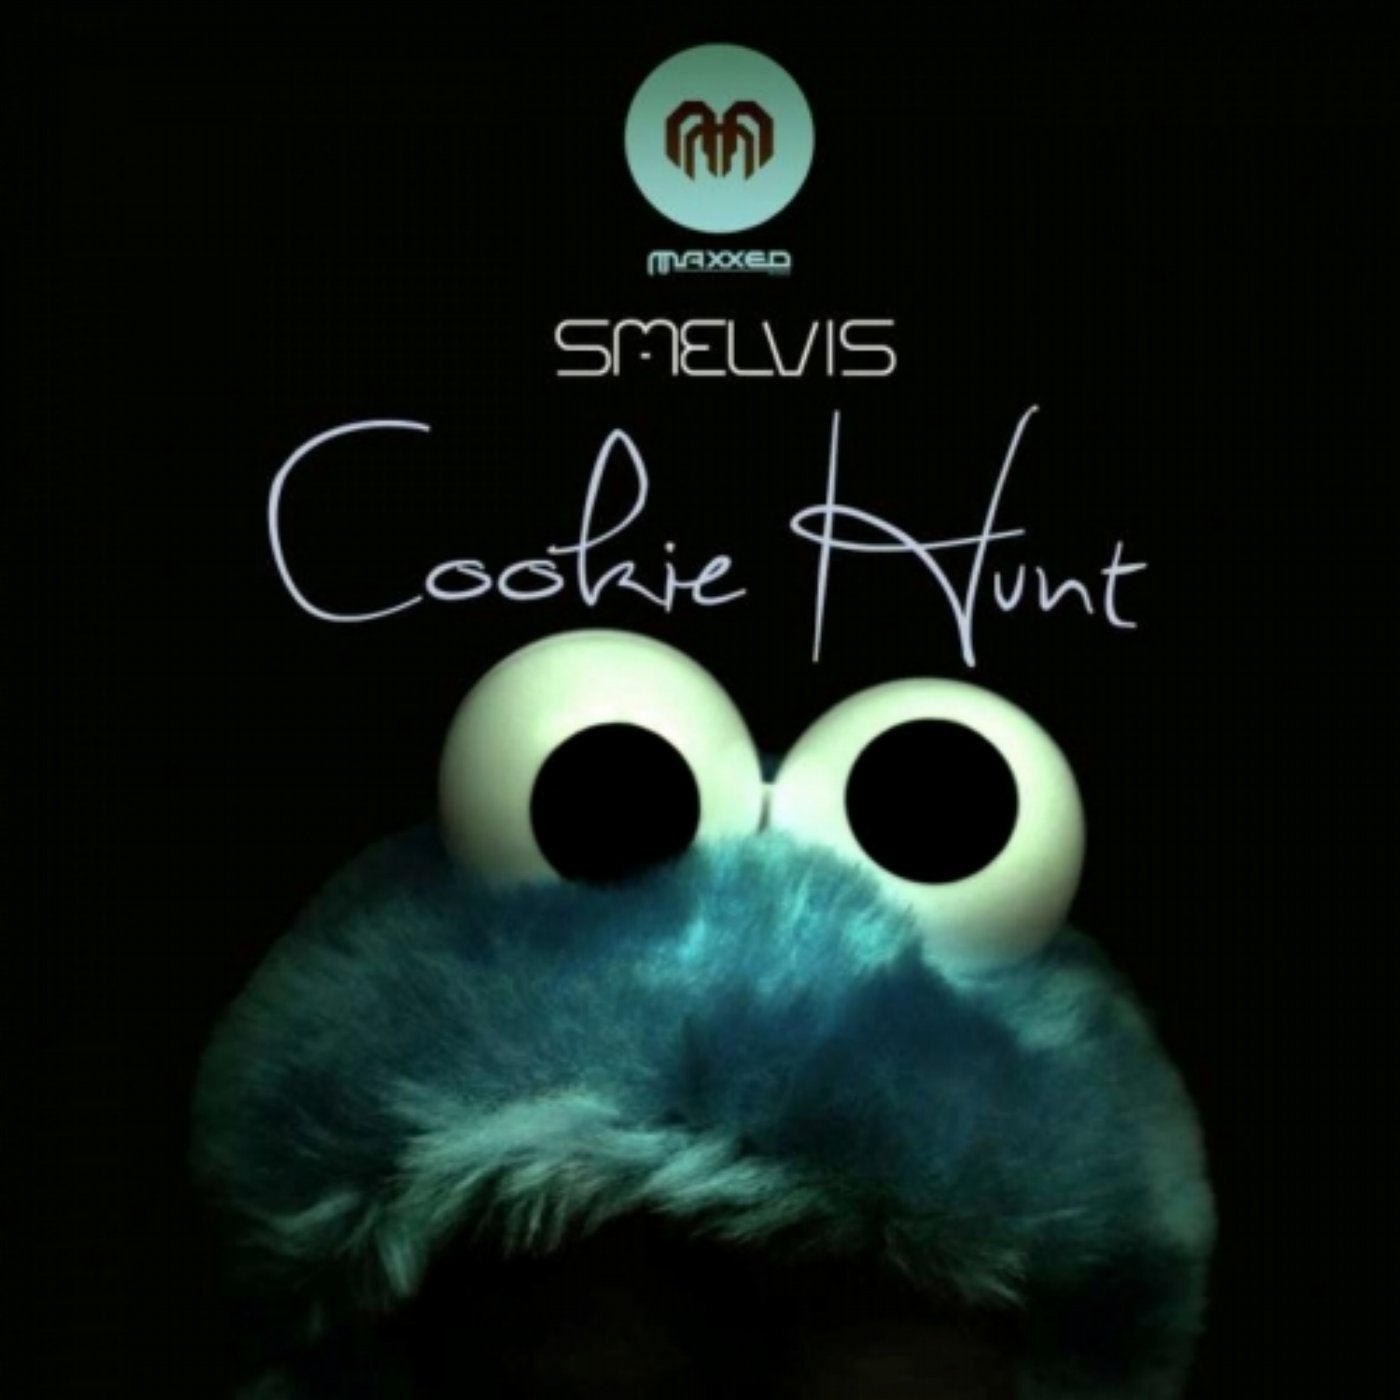 Cookie Hunt EP